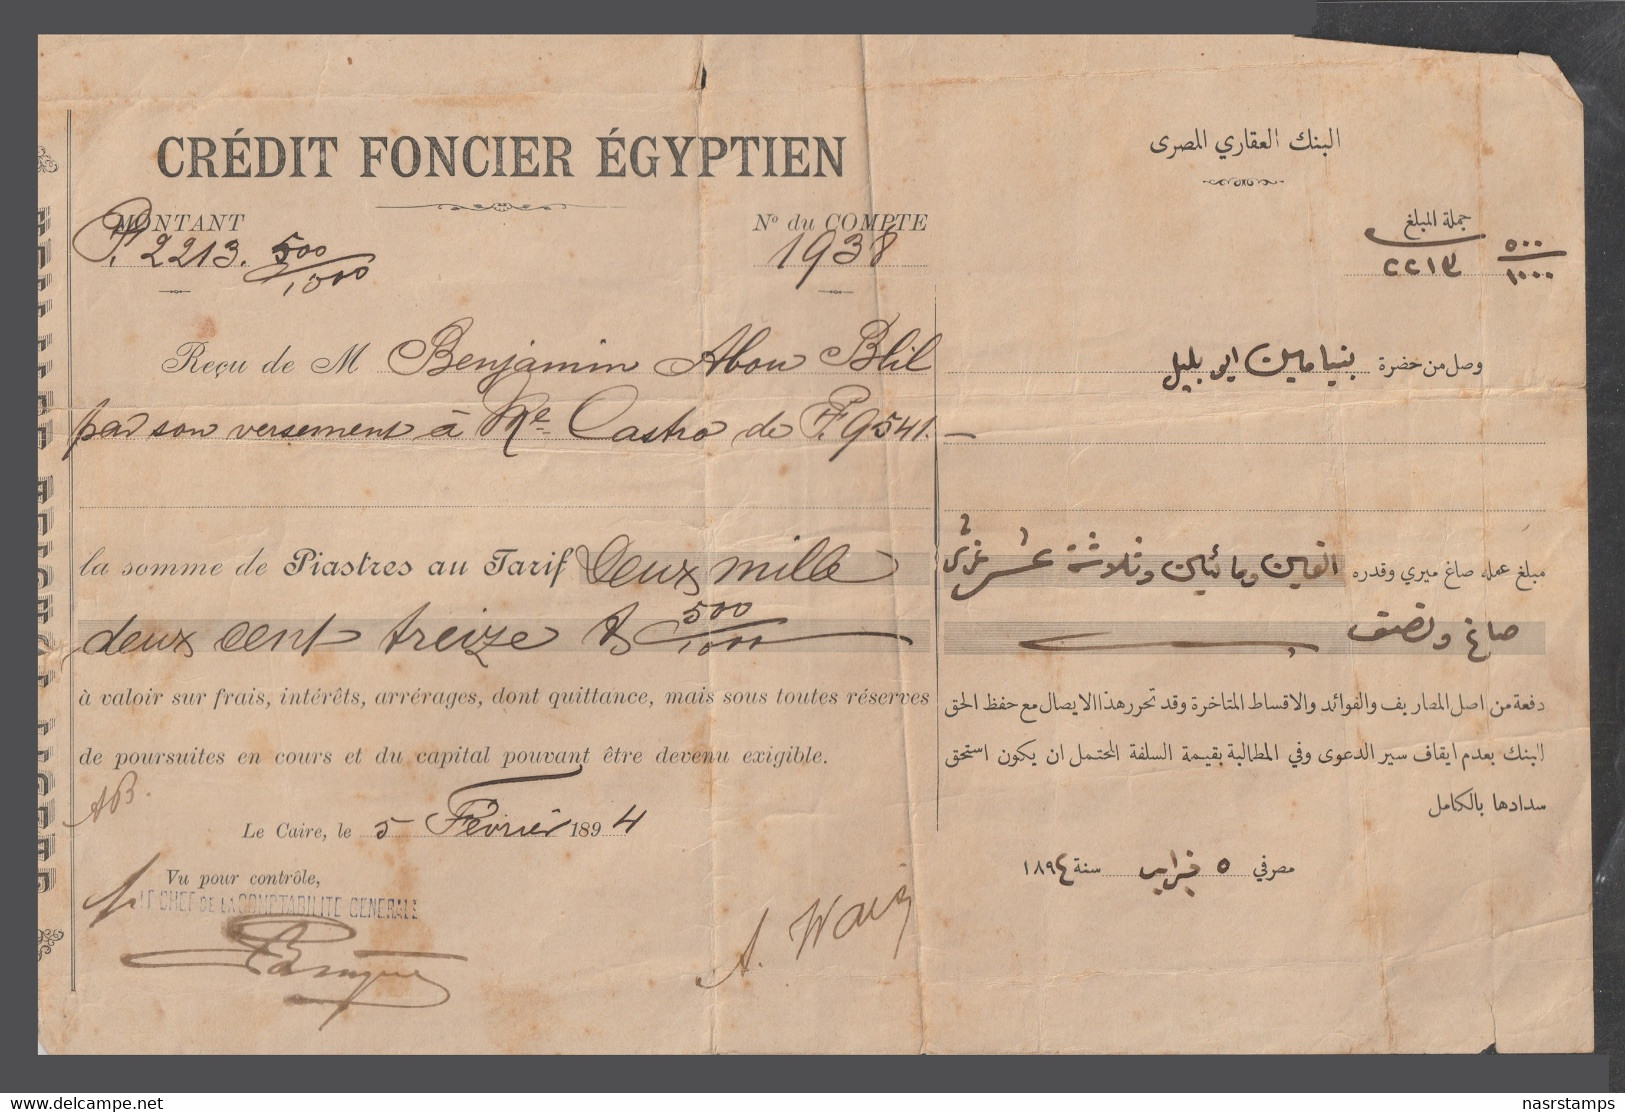 Egypt - 1894 - Rare - Vintage Receipt - Credit Foncier Egyptien - 1866-1914 Khedivate Of Egypt